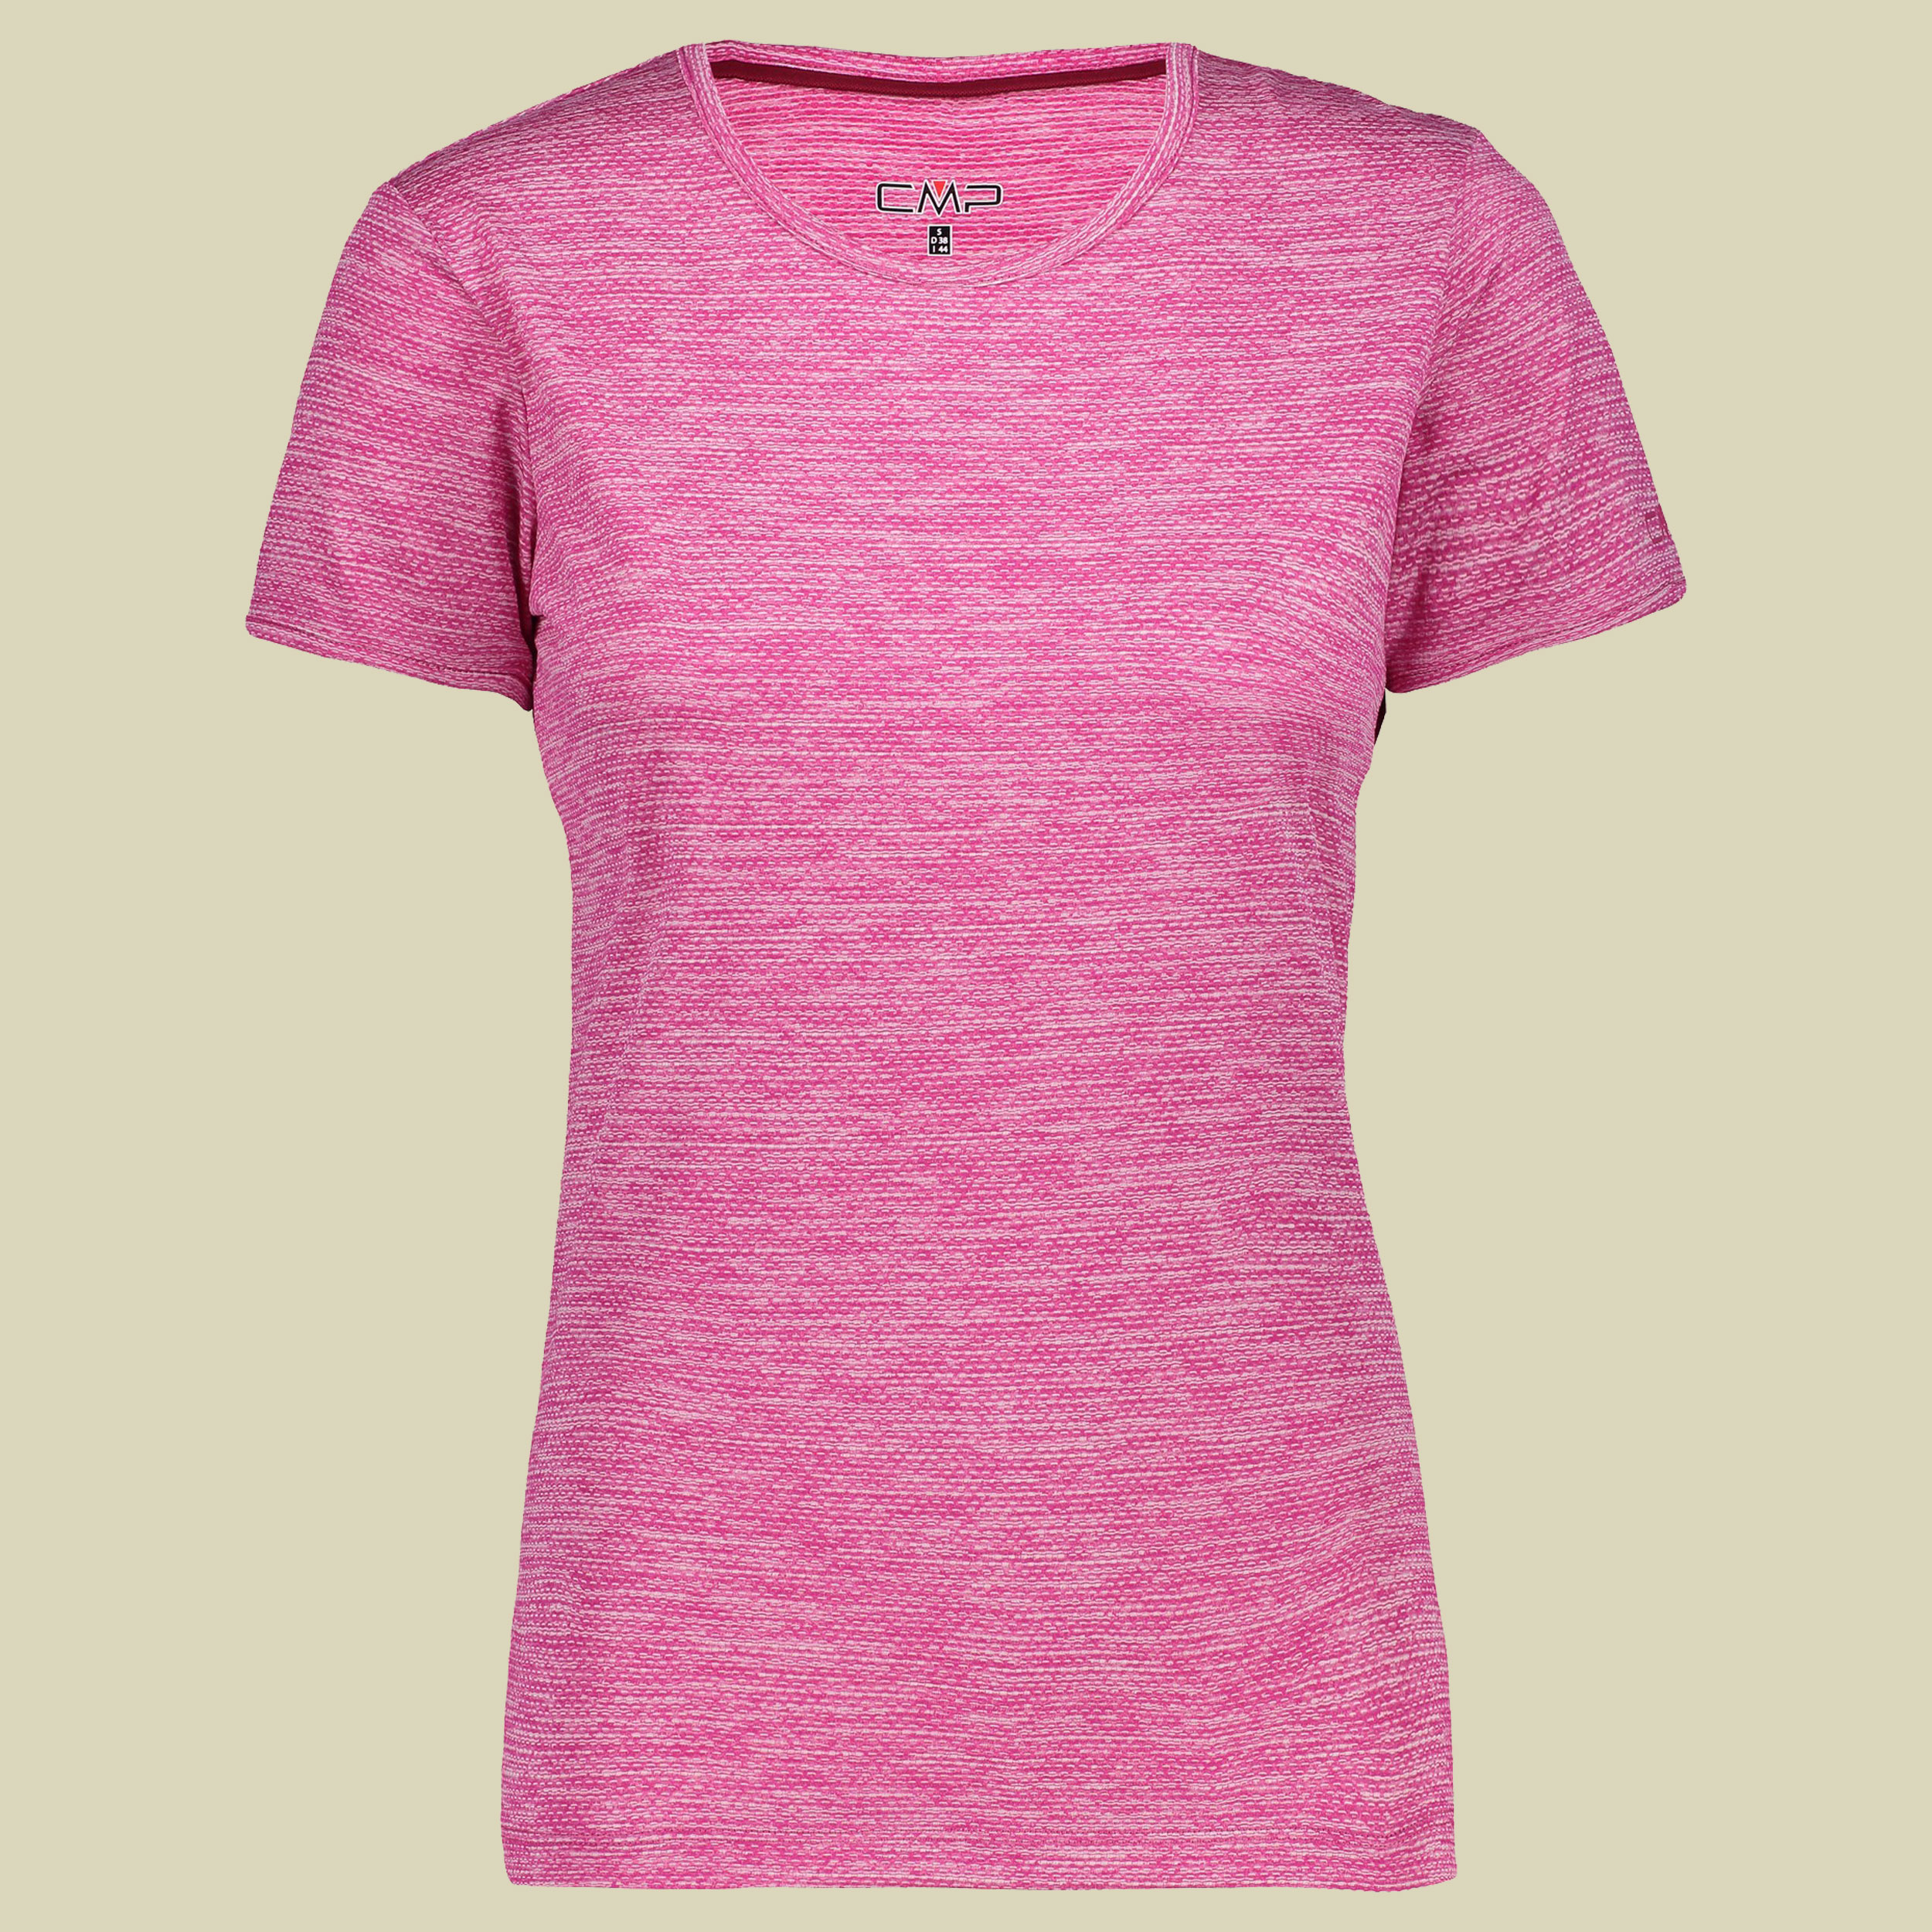 Woman T-Shirt Melange 39T6506 Größe 44 Farbe H834 geraneo melange